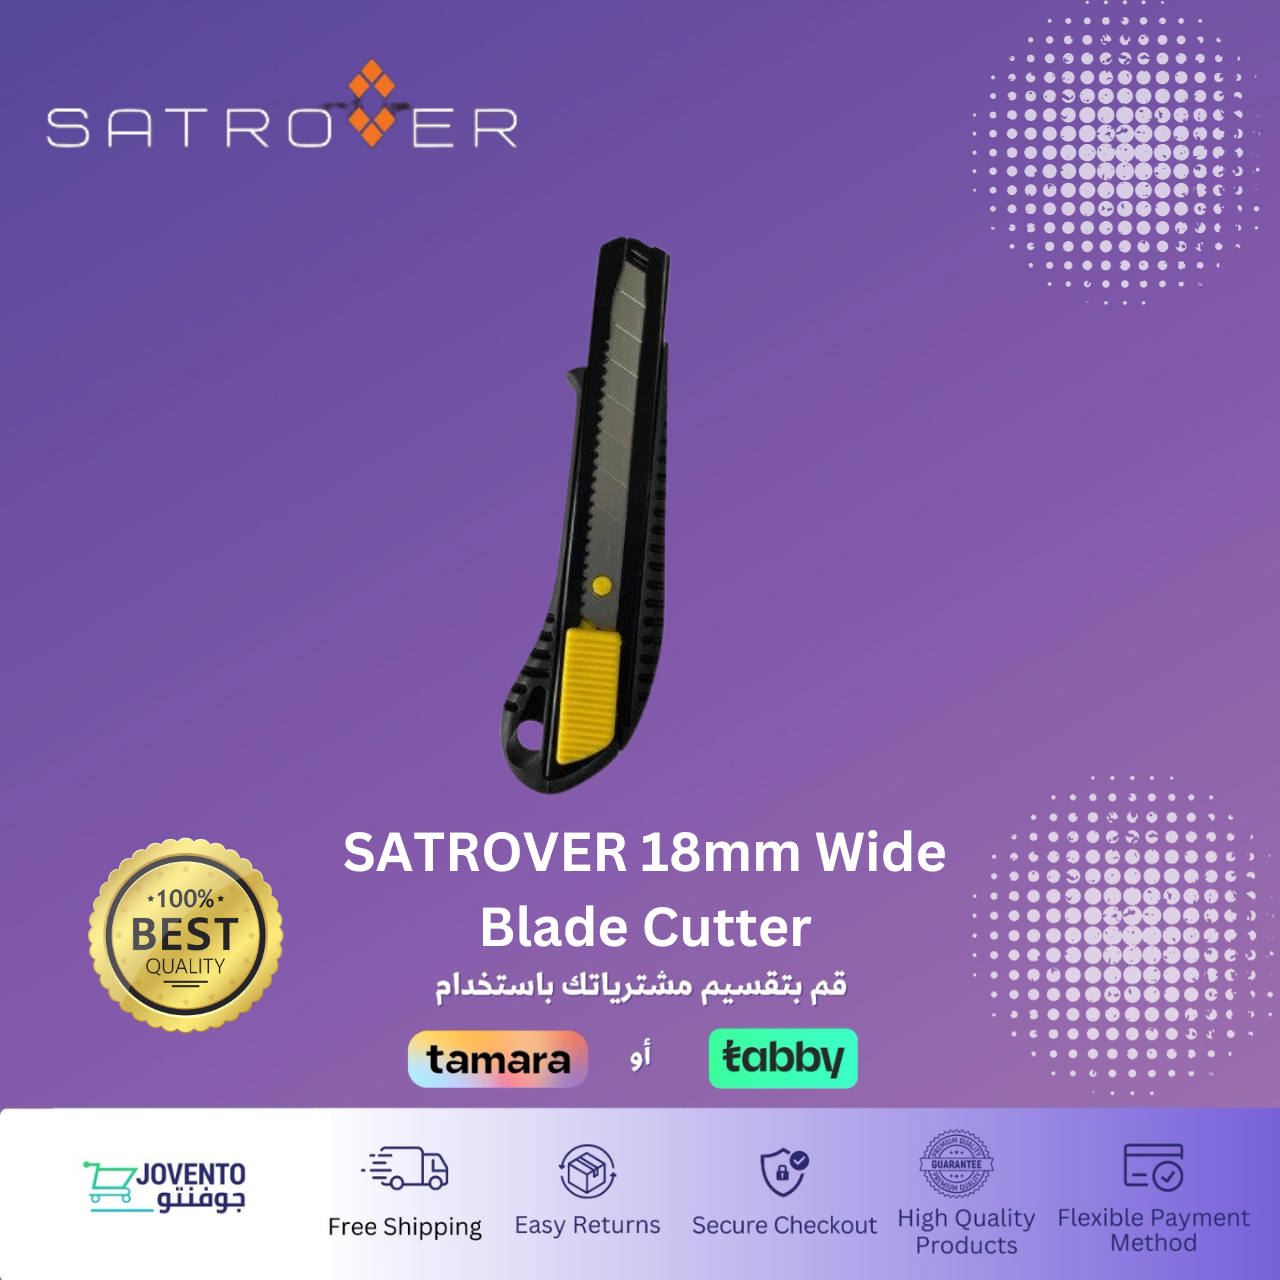 SATROVER 18mm Wide Blade Cutter